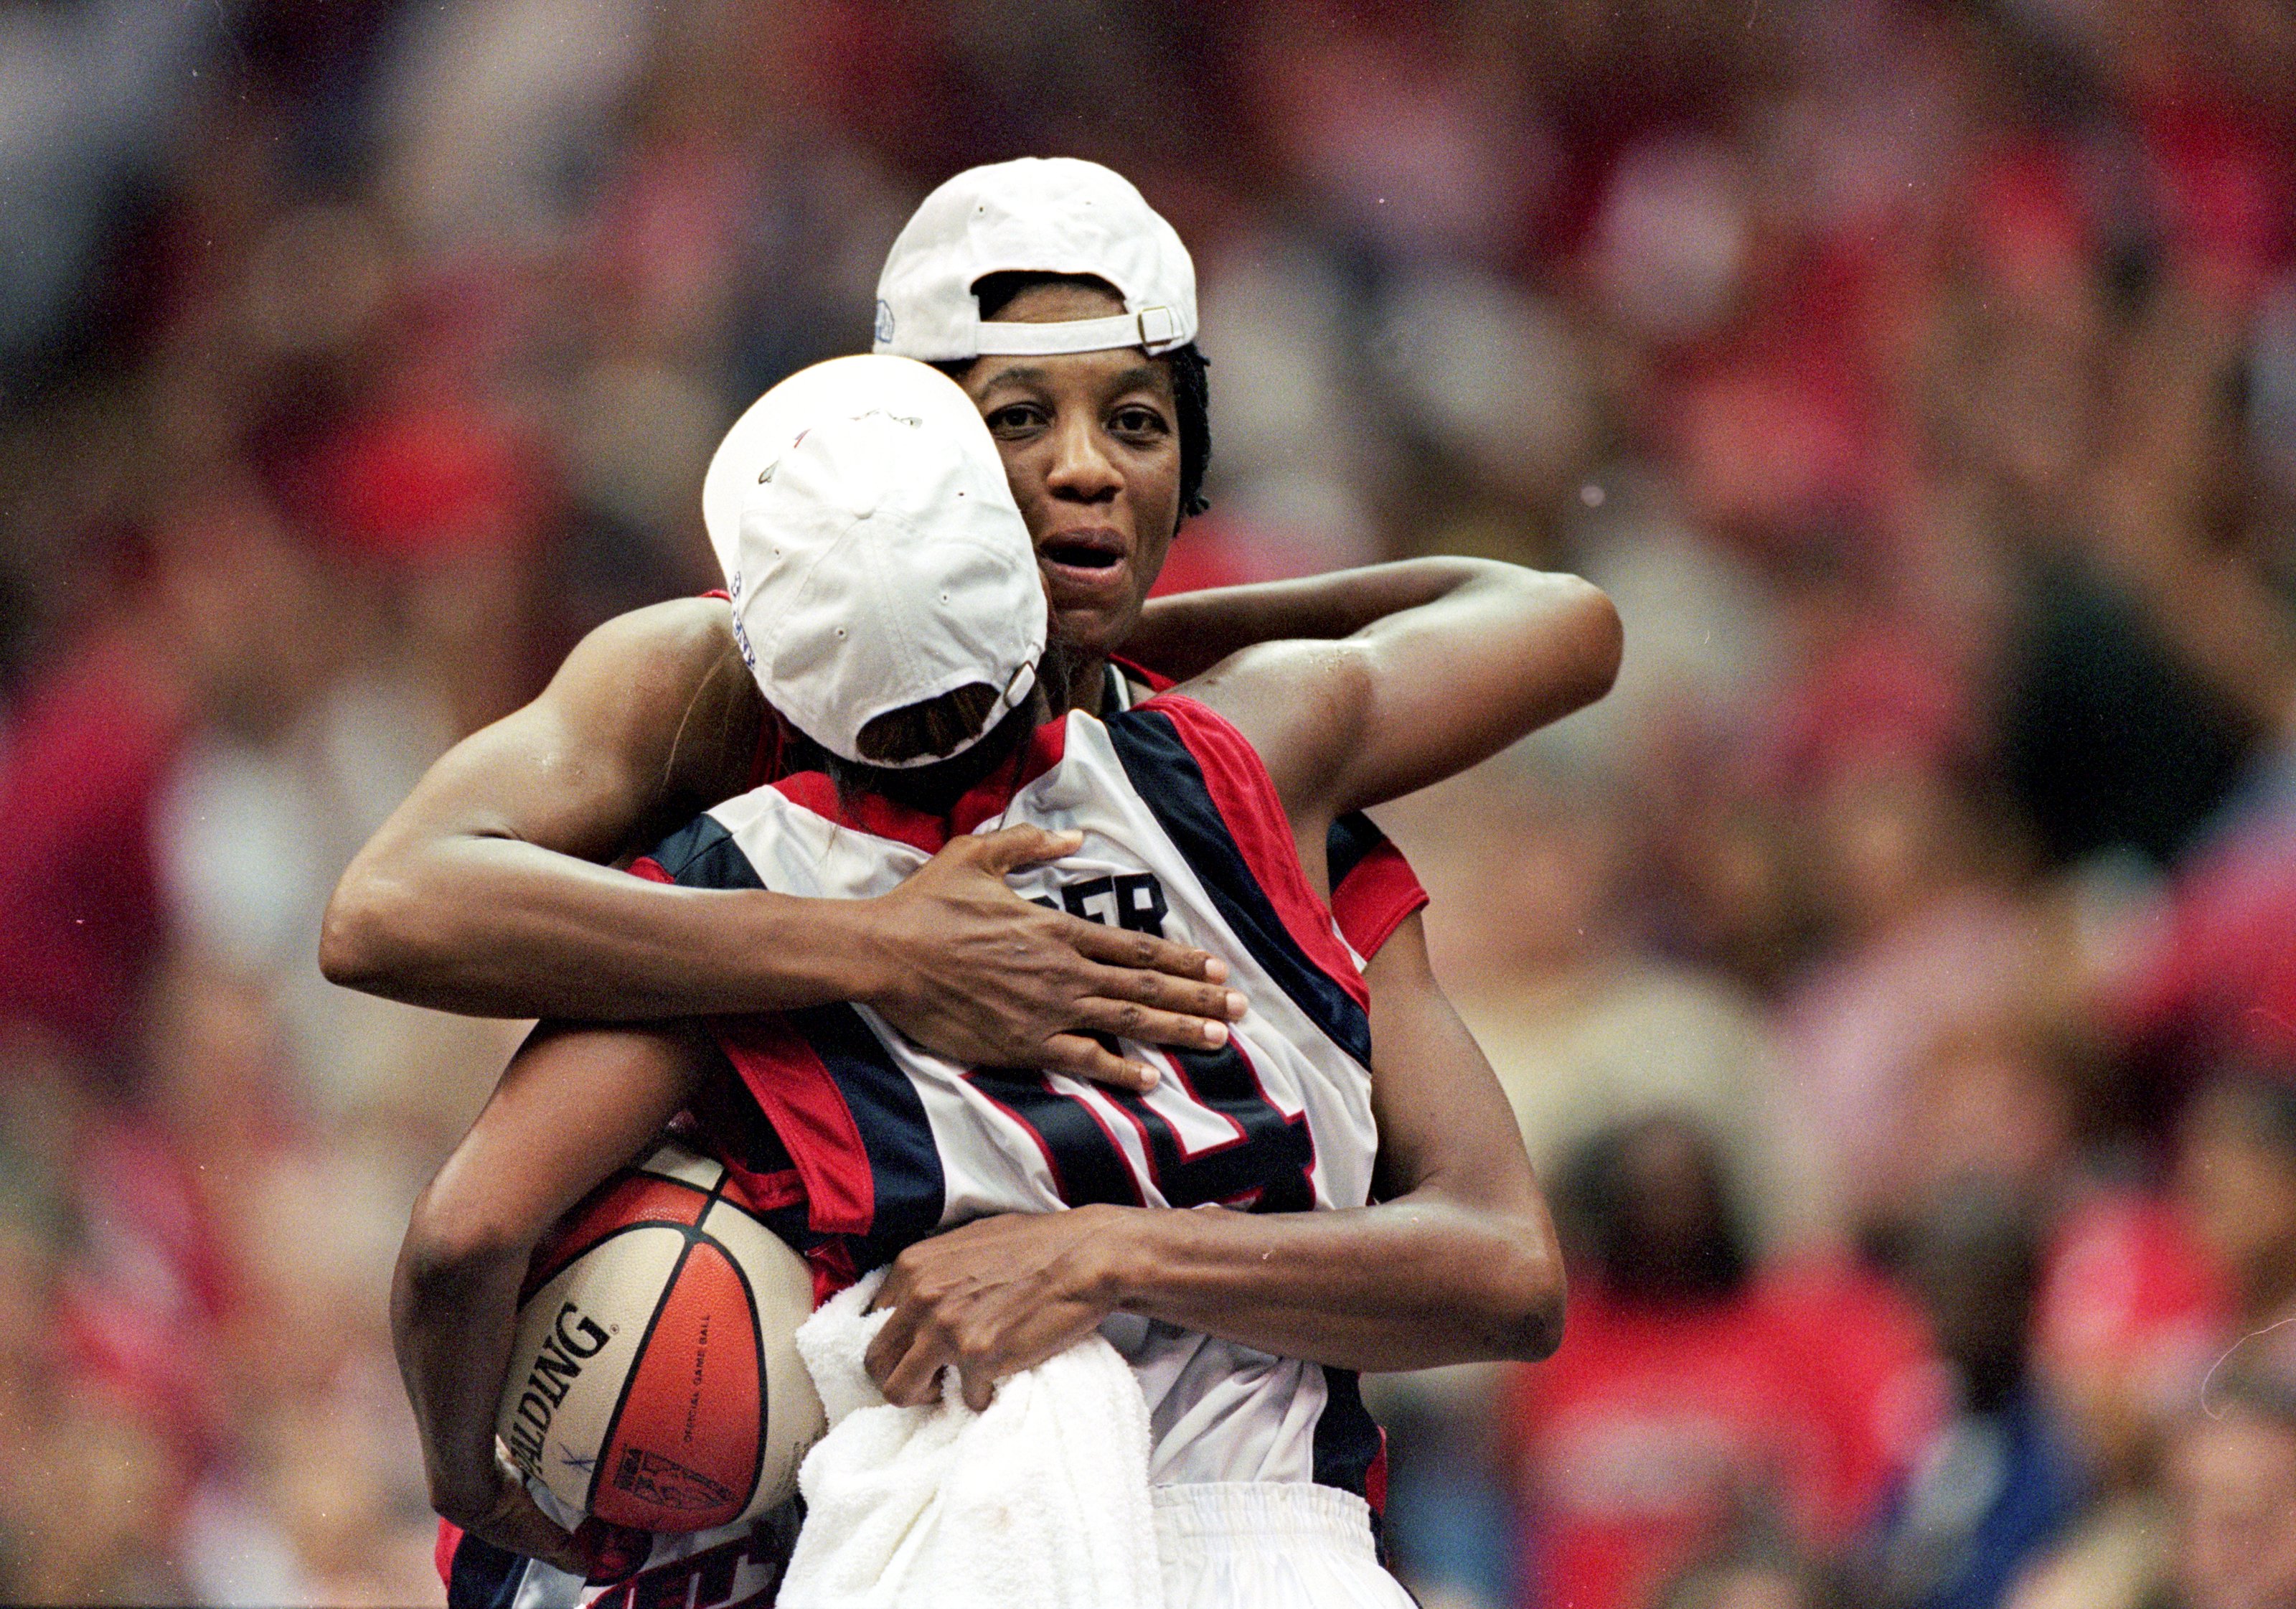 HISTORY RECAP: Houston Comets won 4th WNBA Championship 23 years